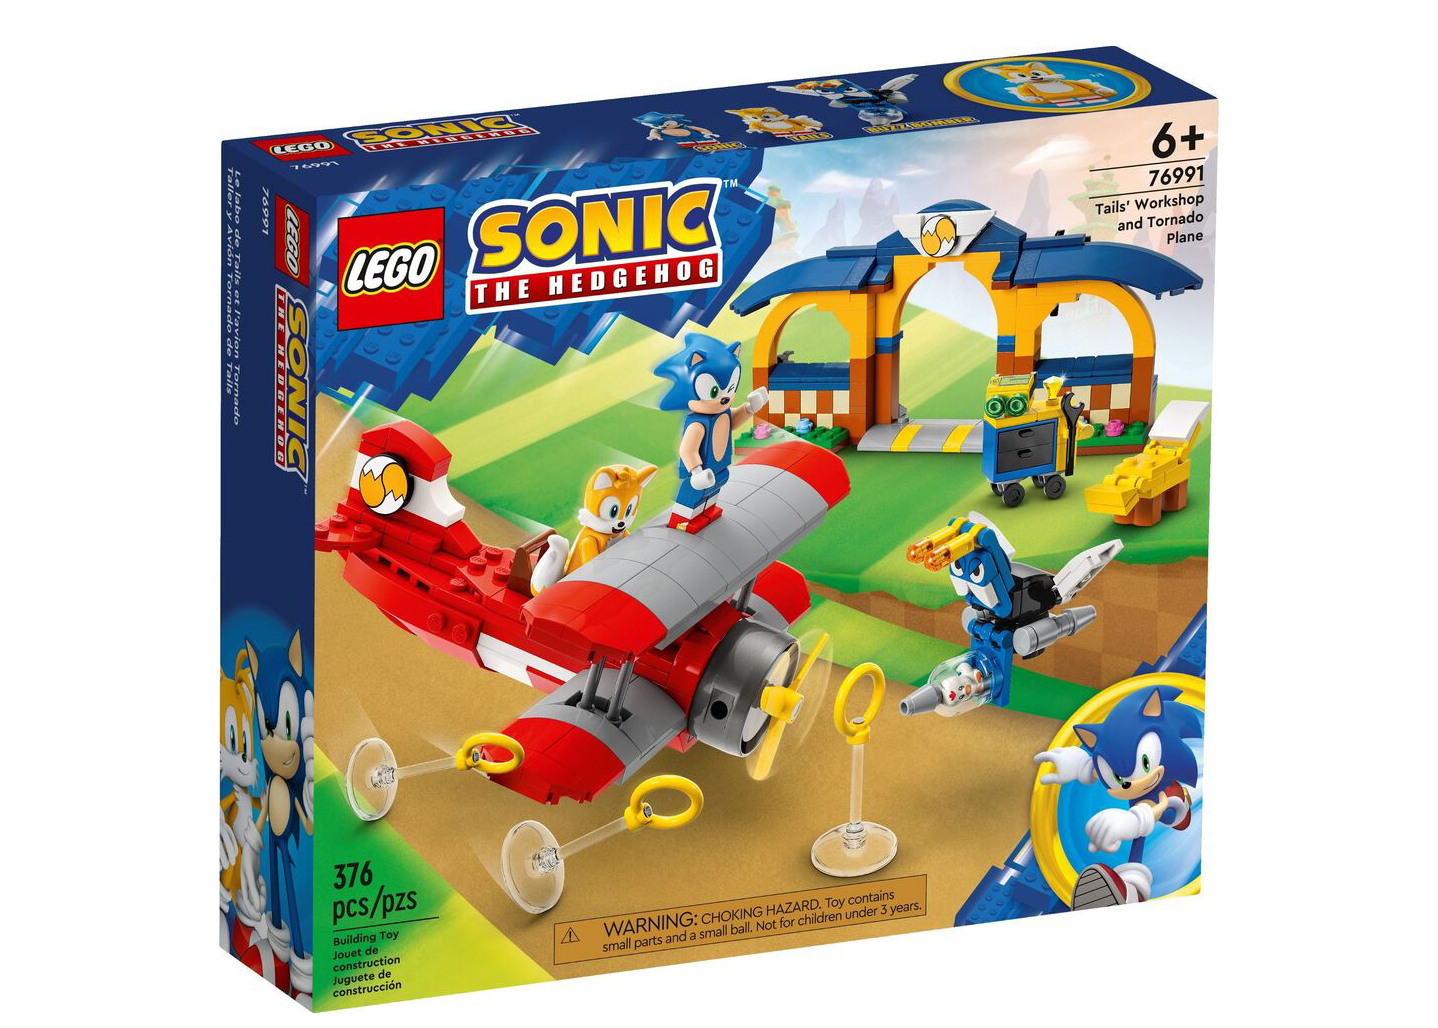 LEGO Sonic The Hedgehog Tails' Workshop and Tornado Plane Set